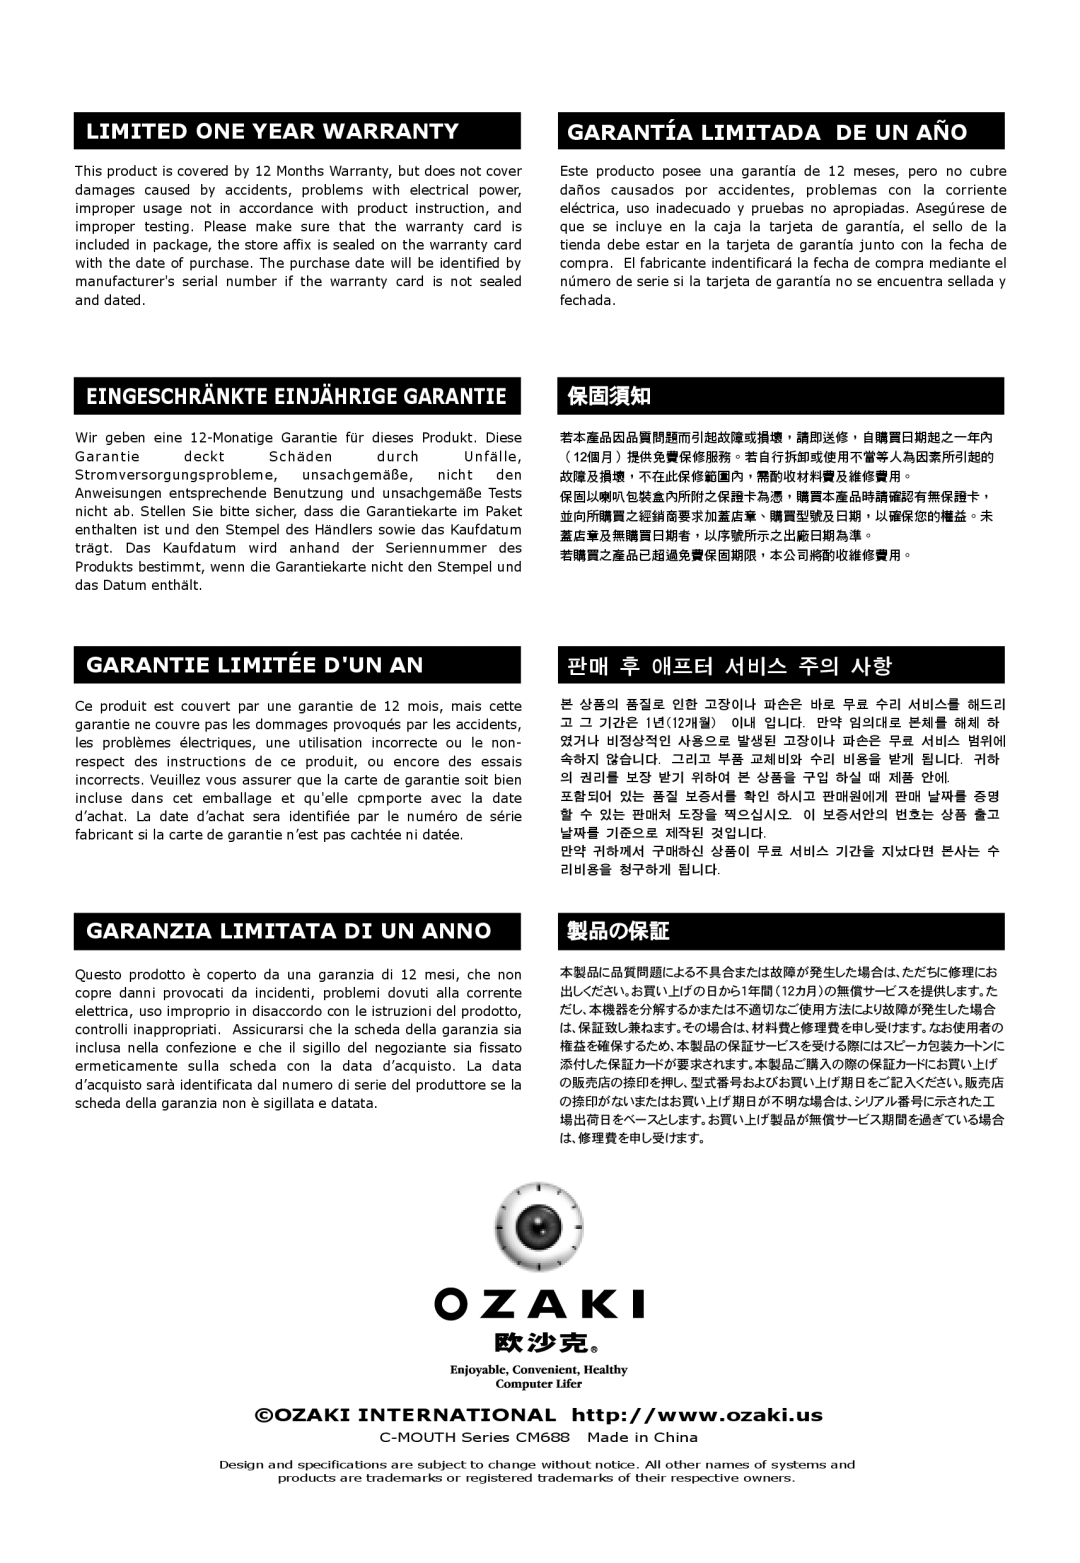 Ozaki Worldwide CM688 manual Limited One Year Warranty, Garantía Limitada De Un Año, 保固須知, Garantie Limitée Dun An, 製品の保証 